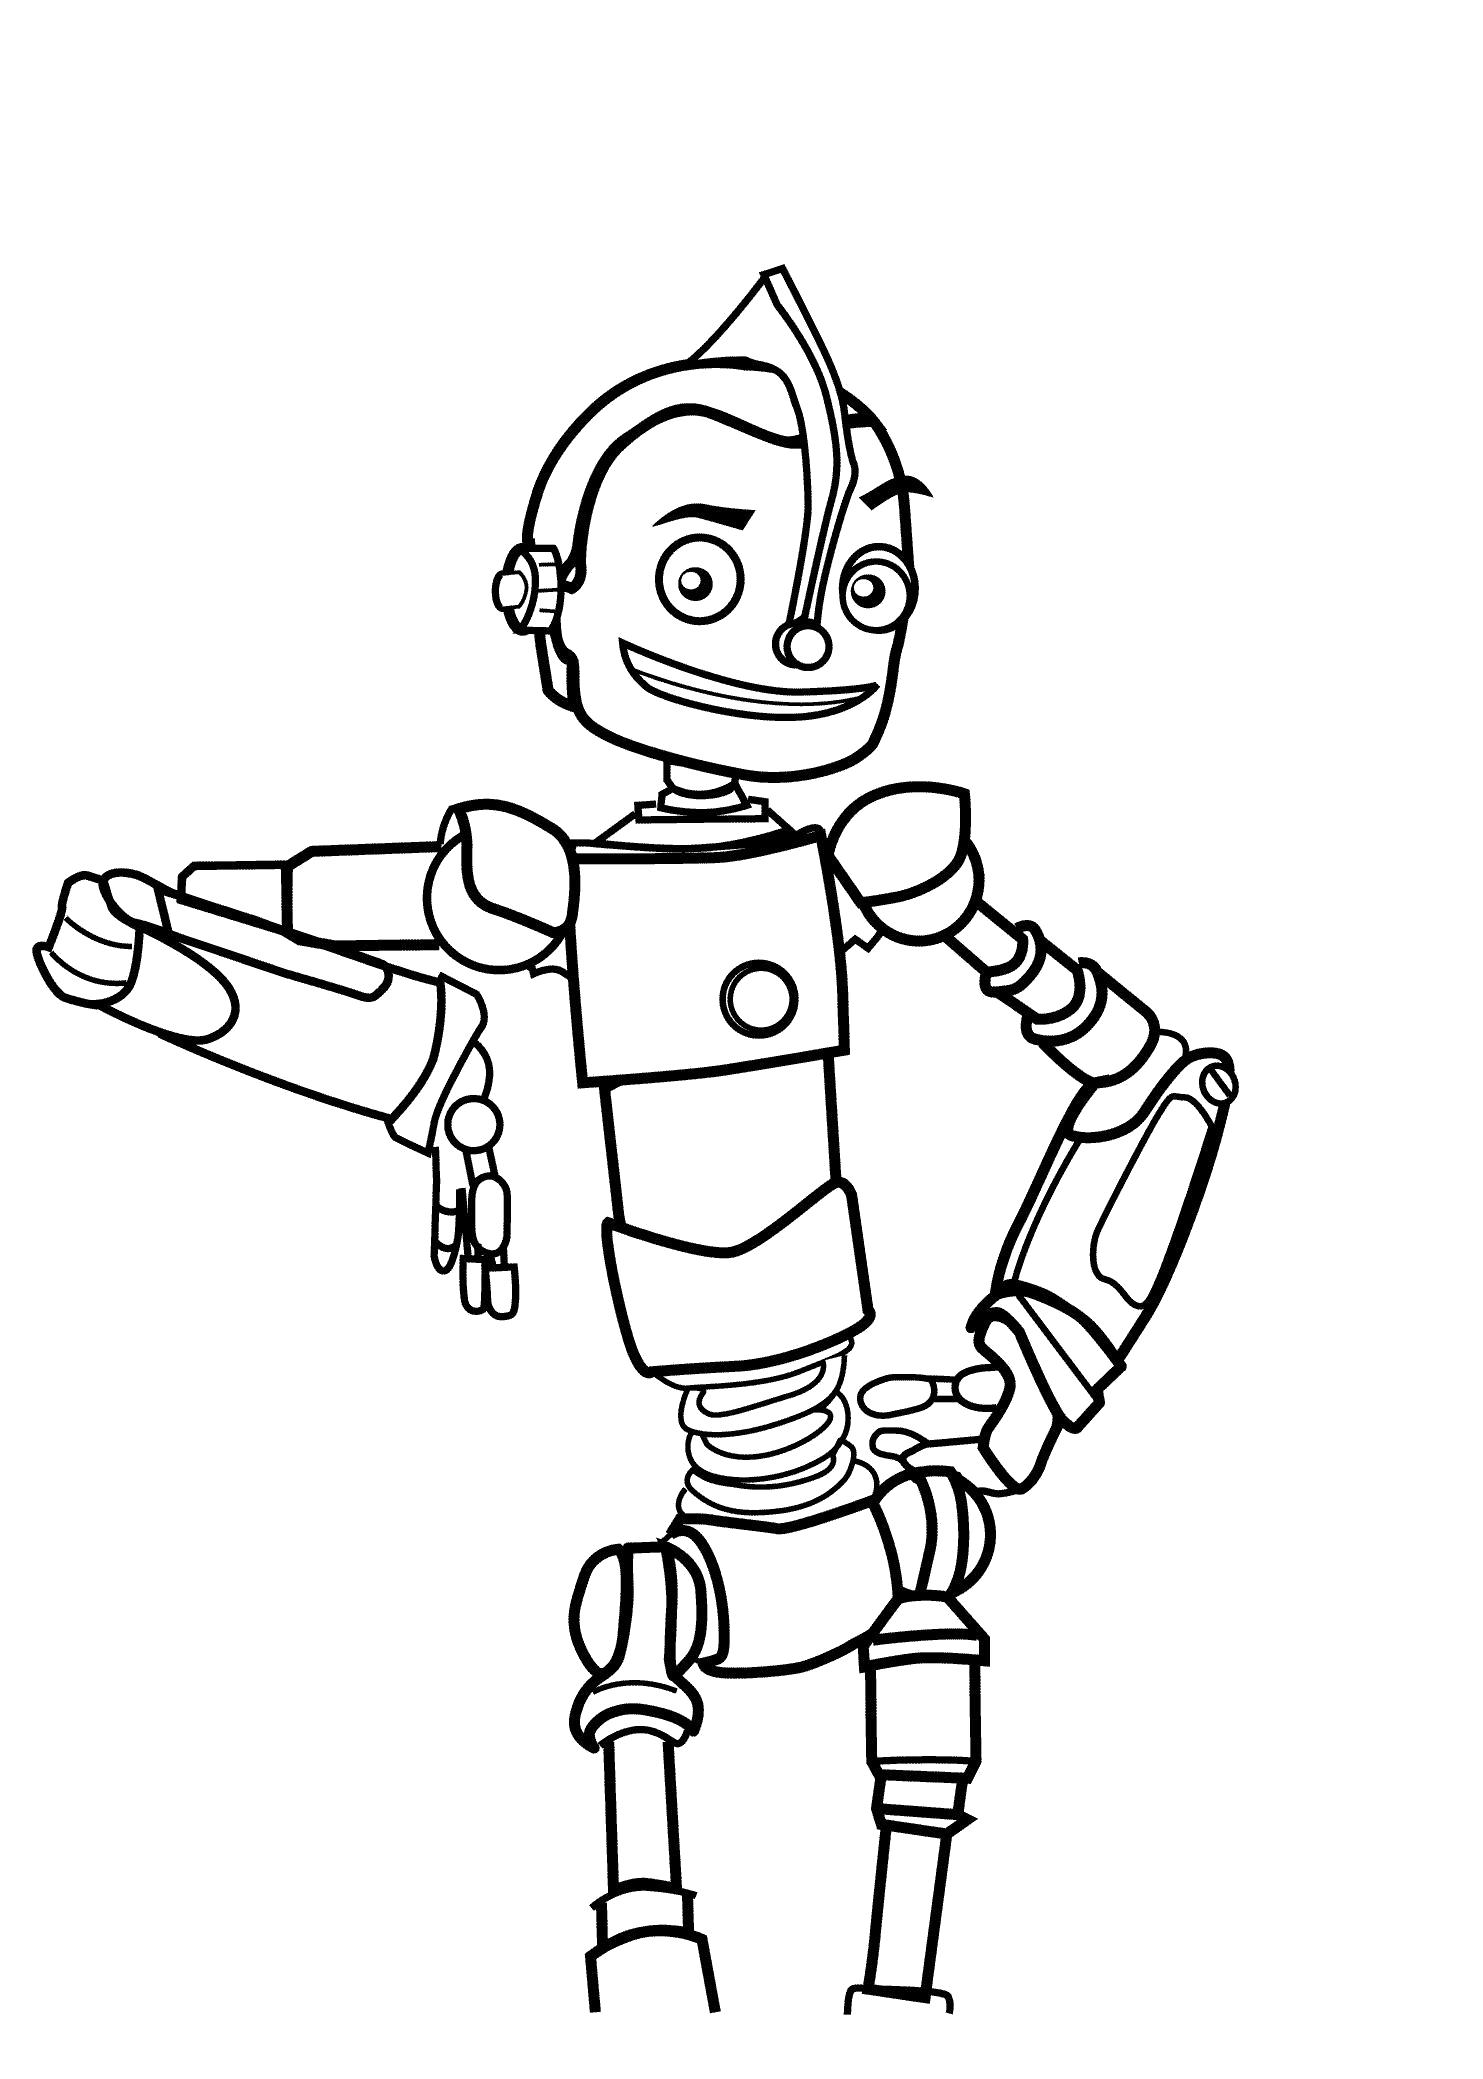 Раскраска робота 3. Раскраски. Роботы. Тоботы. Раскраска. Робот раскраска для детей. Тобот раскраска для детей.